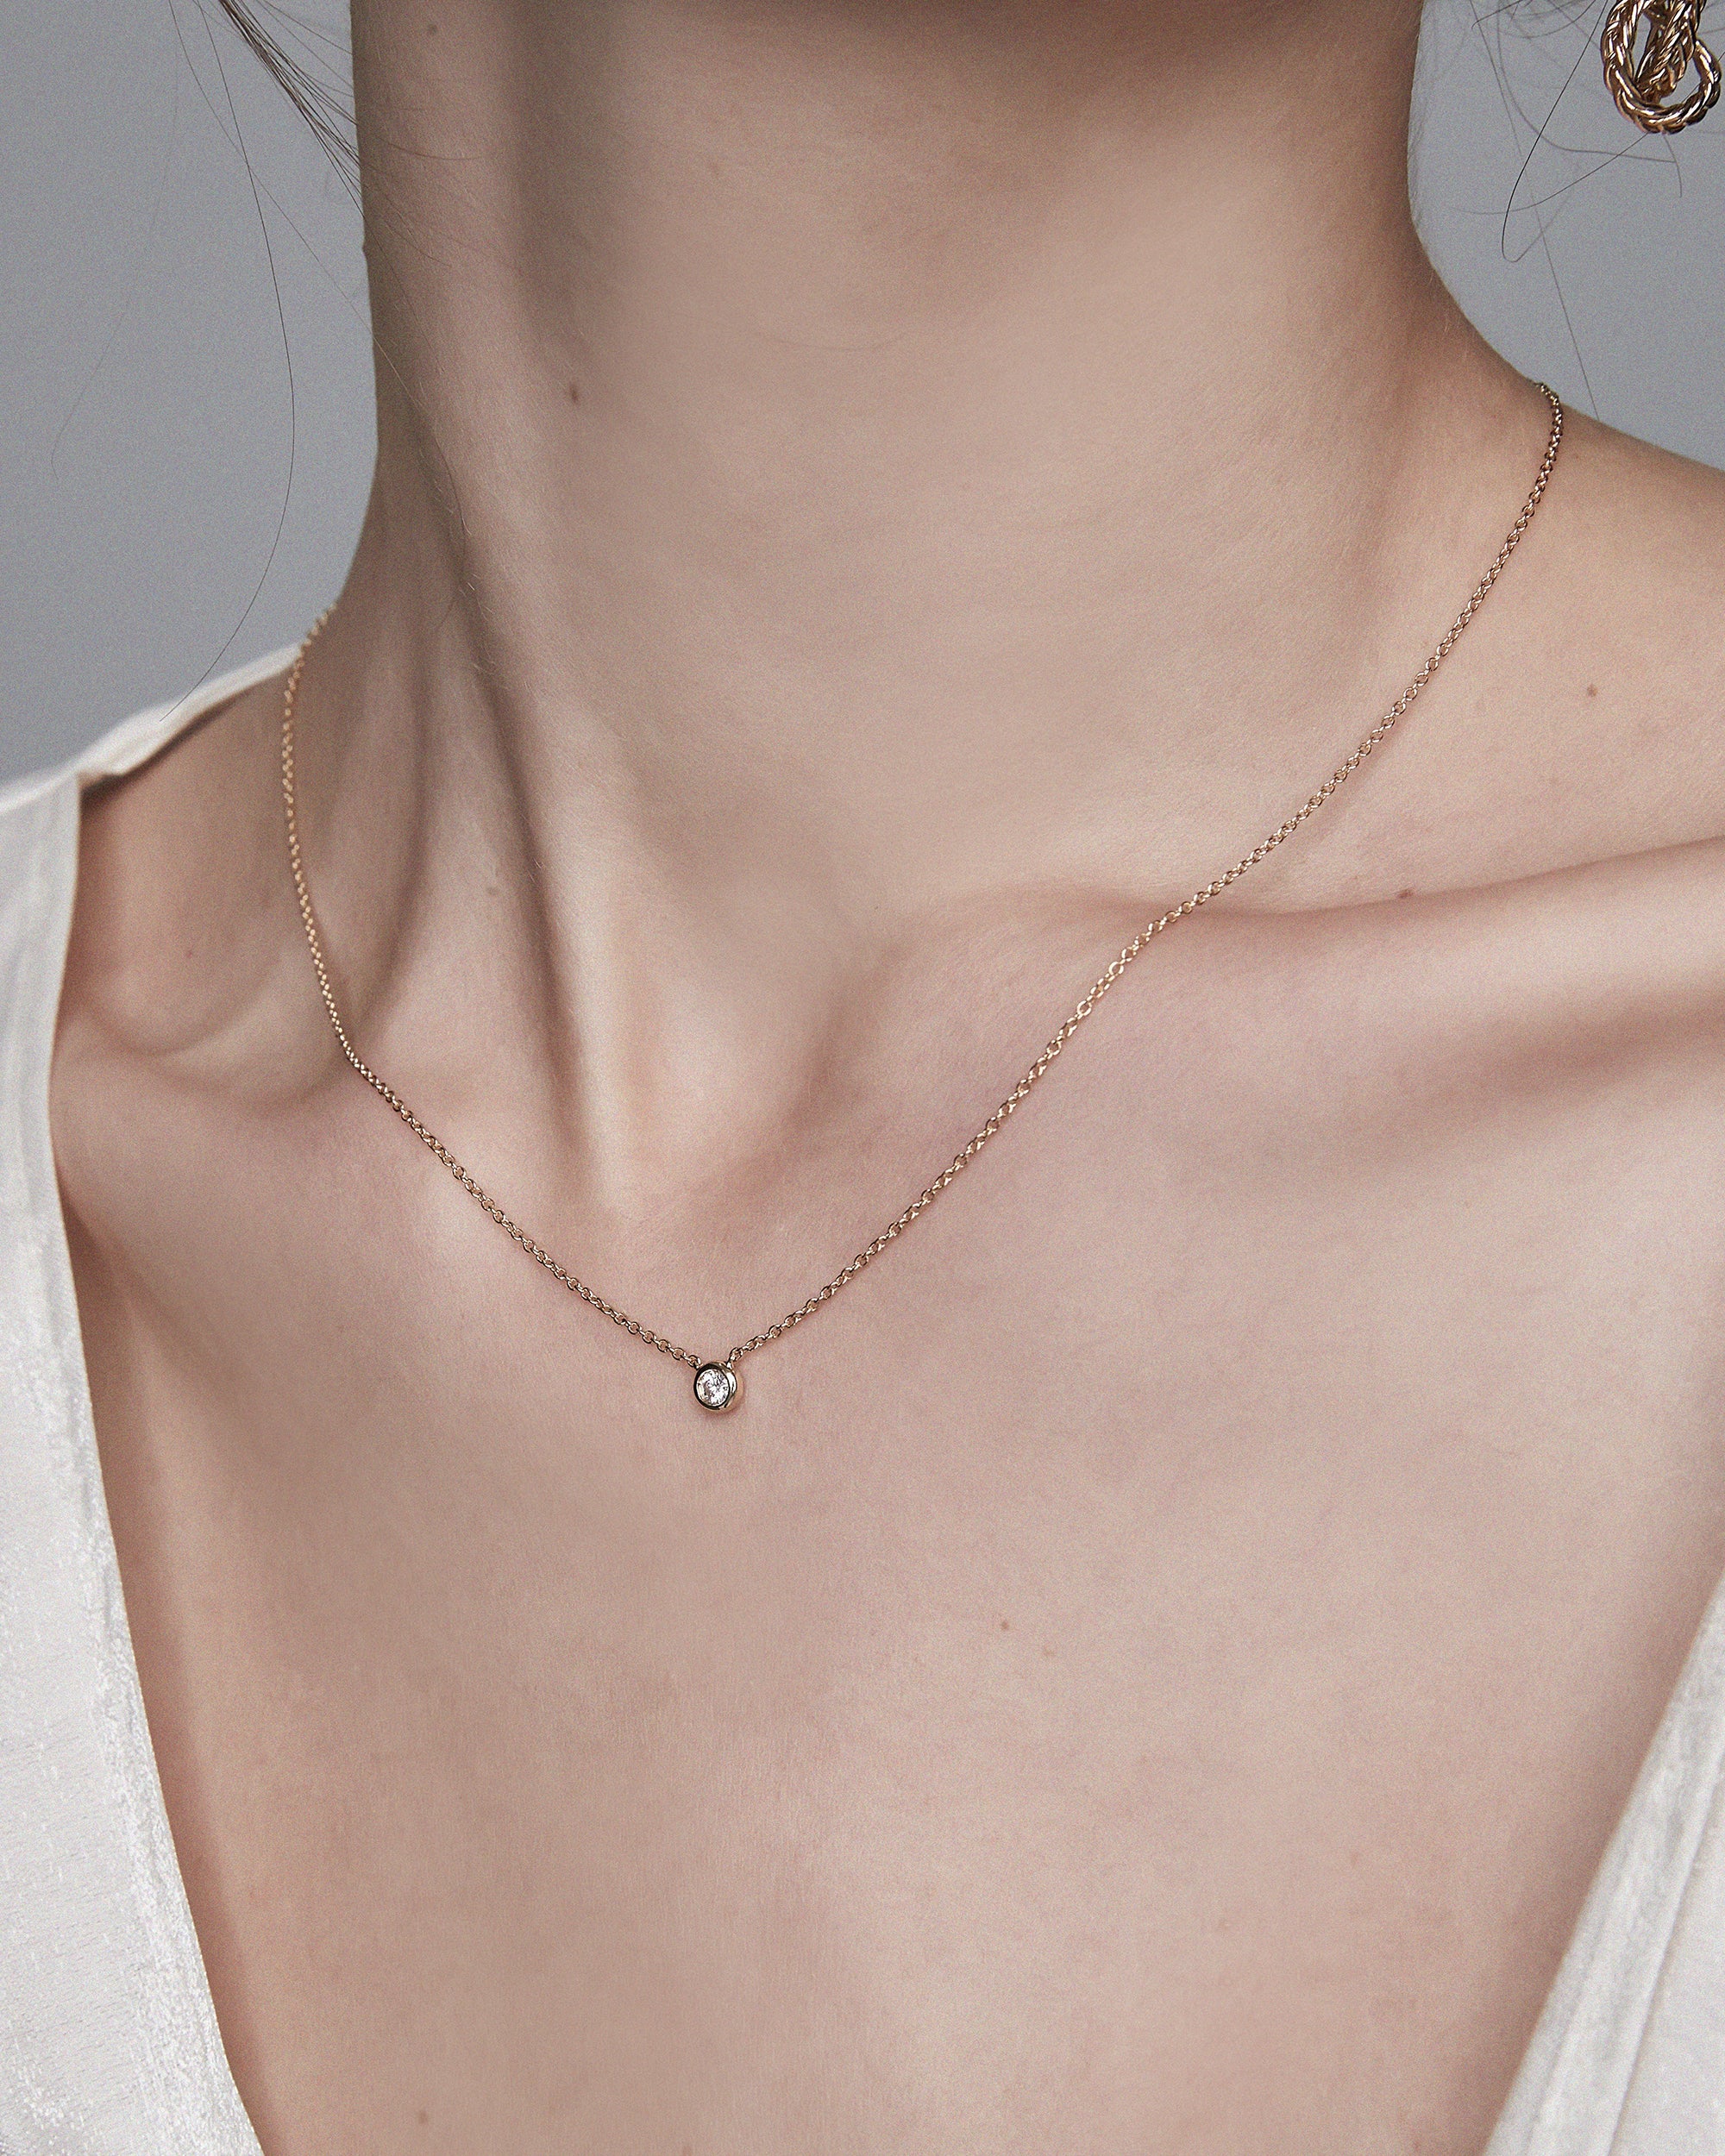 Bezel Set 1/2 Carat Diamond Necklace, 14k White Gold. Classically Elegant |  SuperJeweler.com